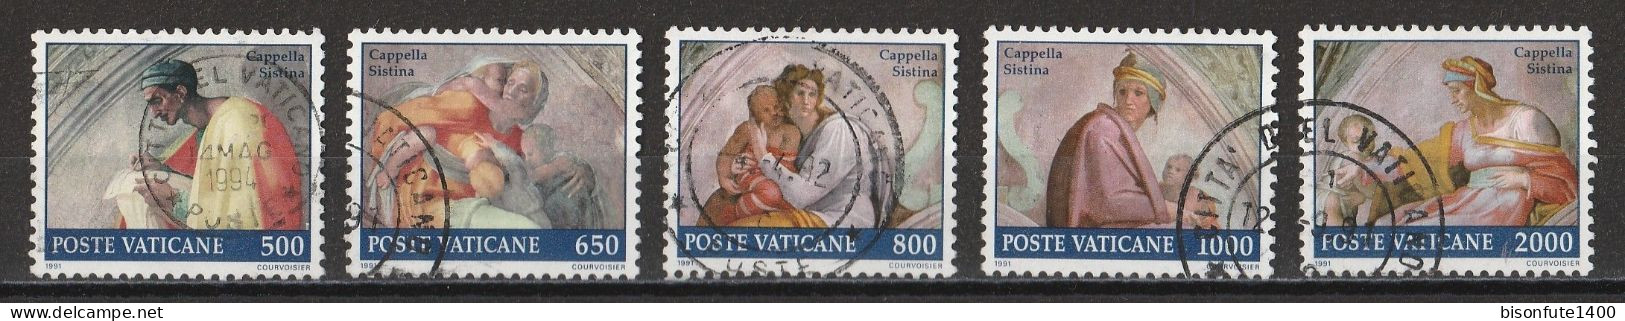 Vatican 1991 : Timbres Yvert & Tellier N° 891 - 892 - 893 - 894 - 895 - 897 - 898 - 899 - 900 Et 901 Oblitérés. - Gebraucht